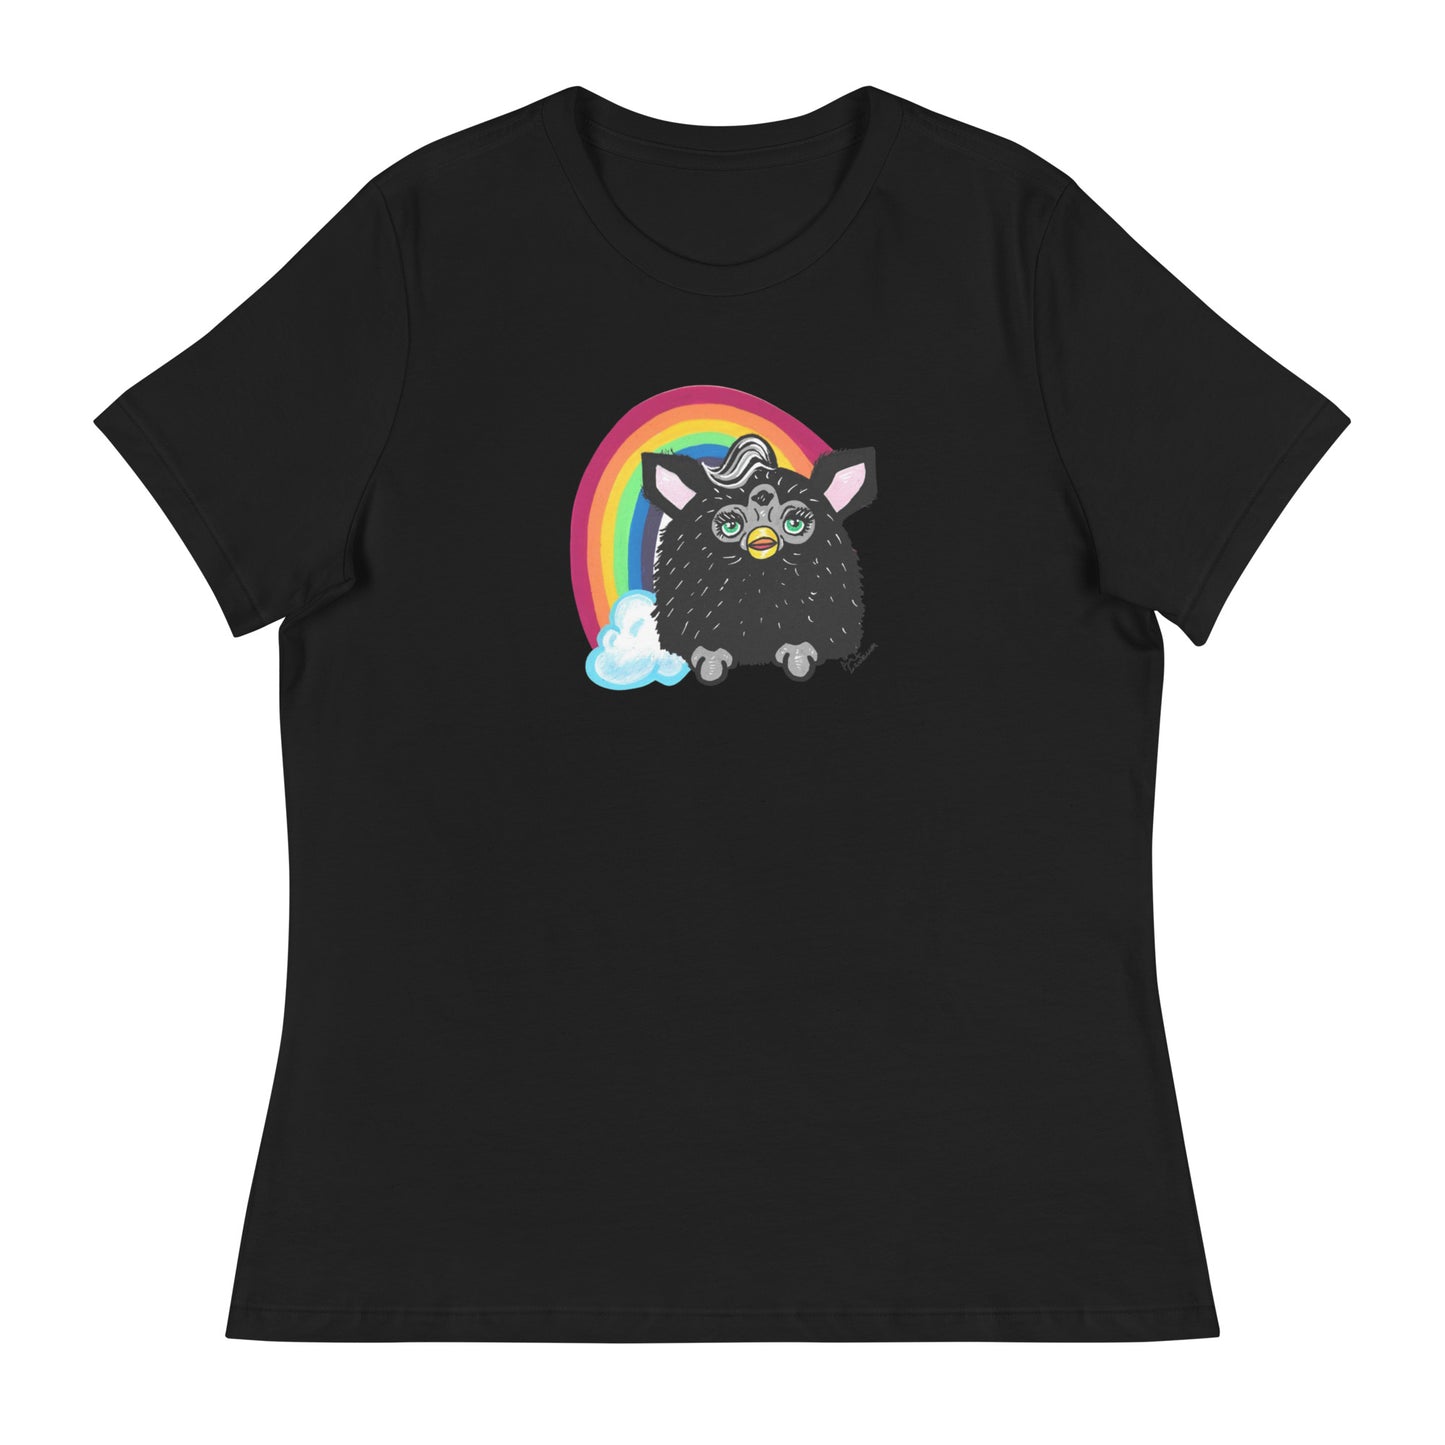 Black Furby with Rainbow Tshirt